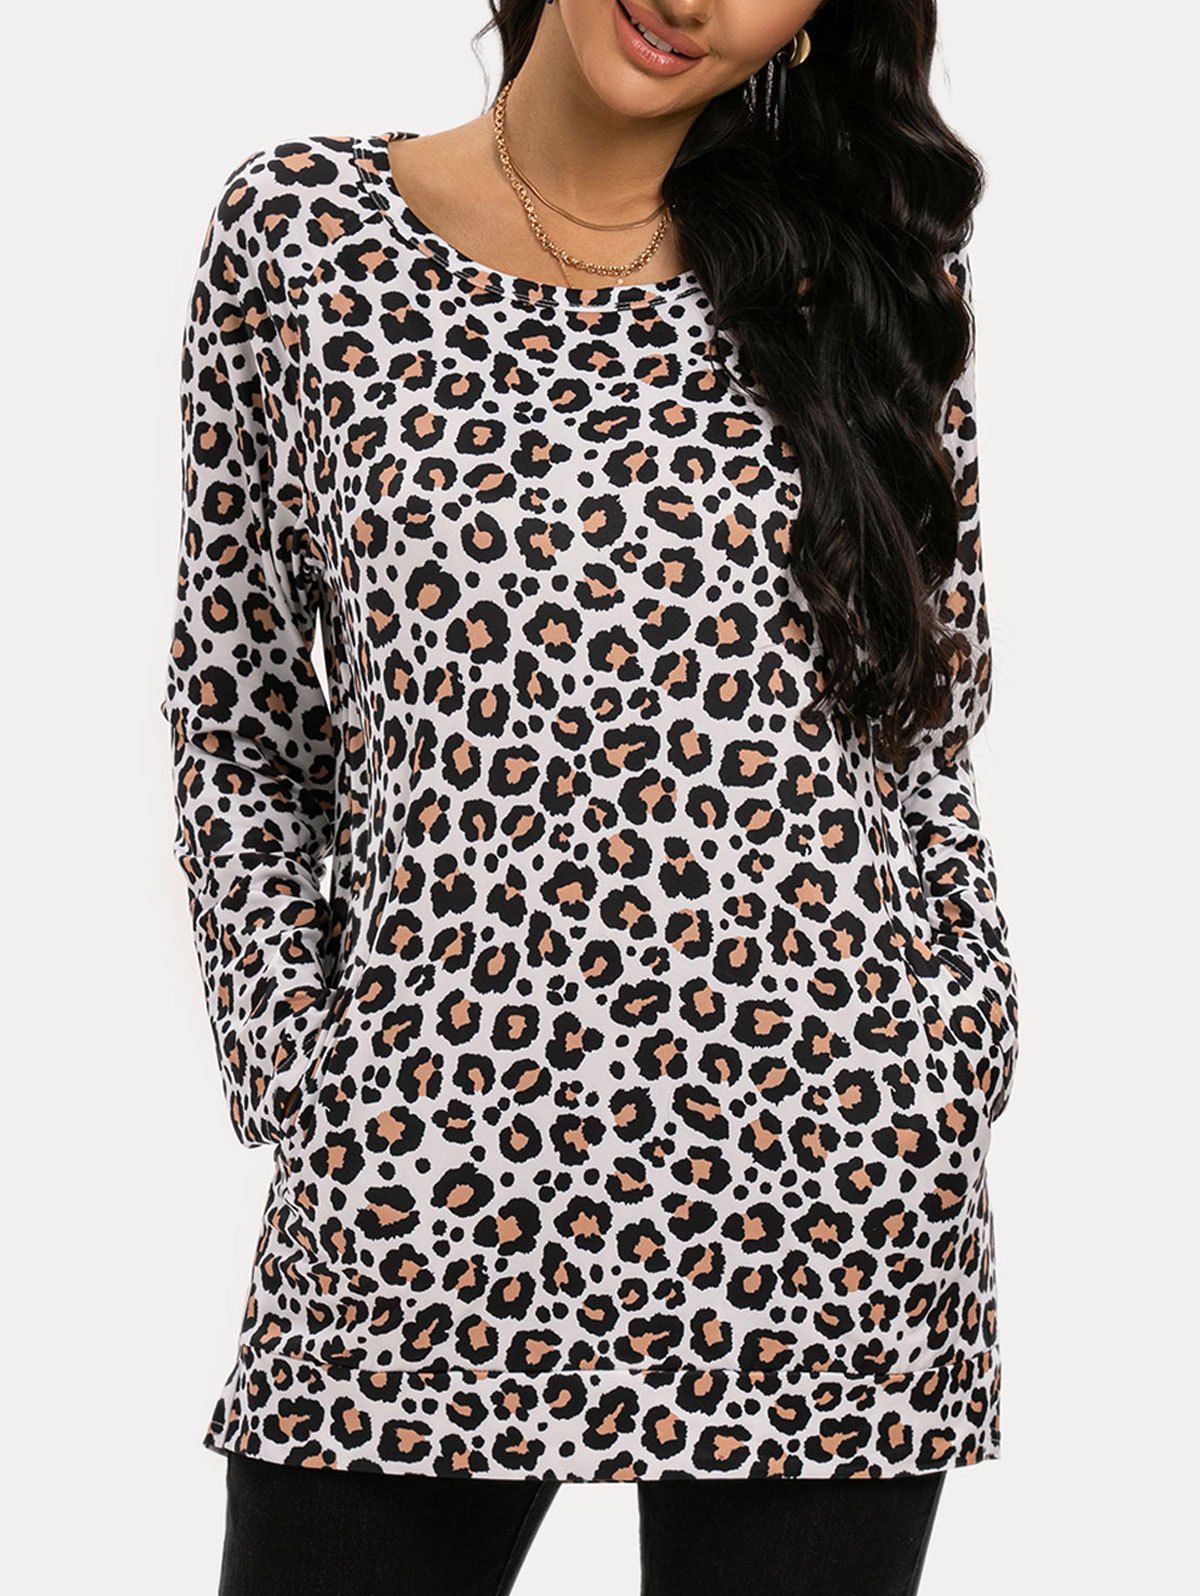 Leopard Slip Pockets Raglan Sleeve Tunic Top - LIGHT COFFEE 2XL